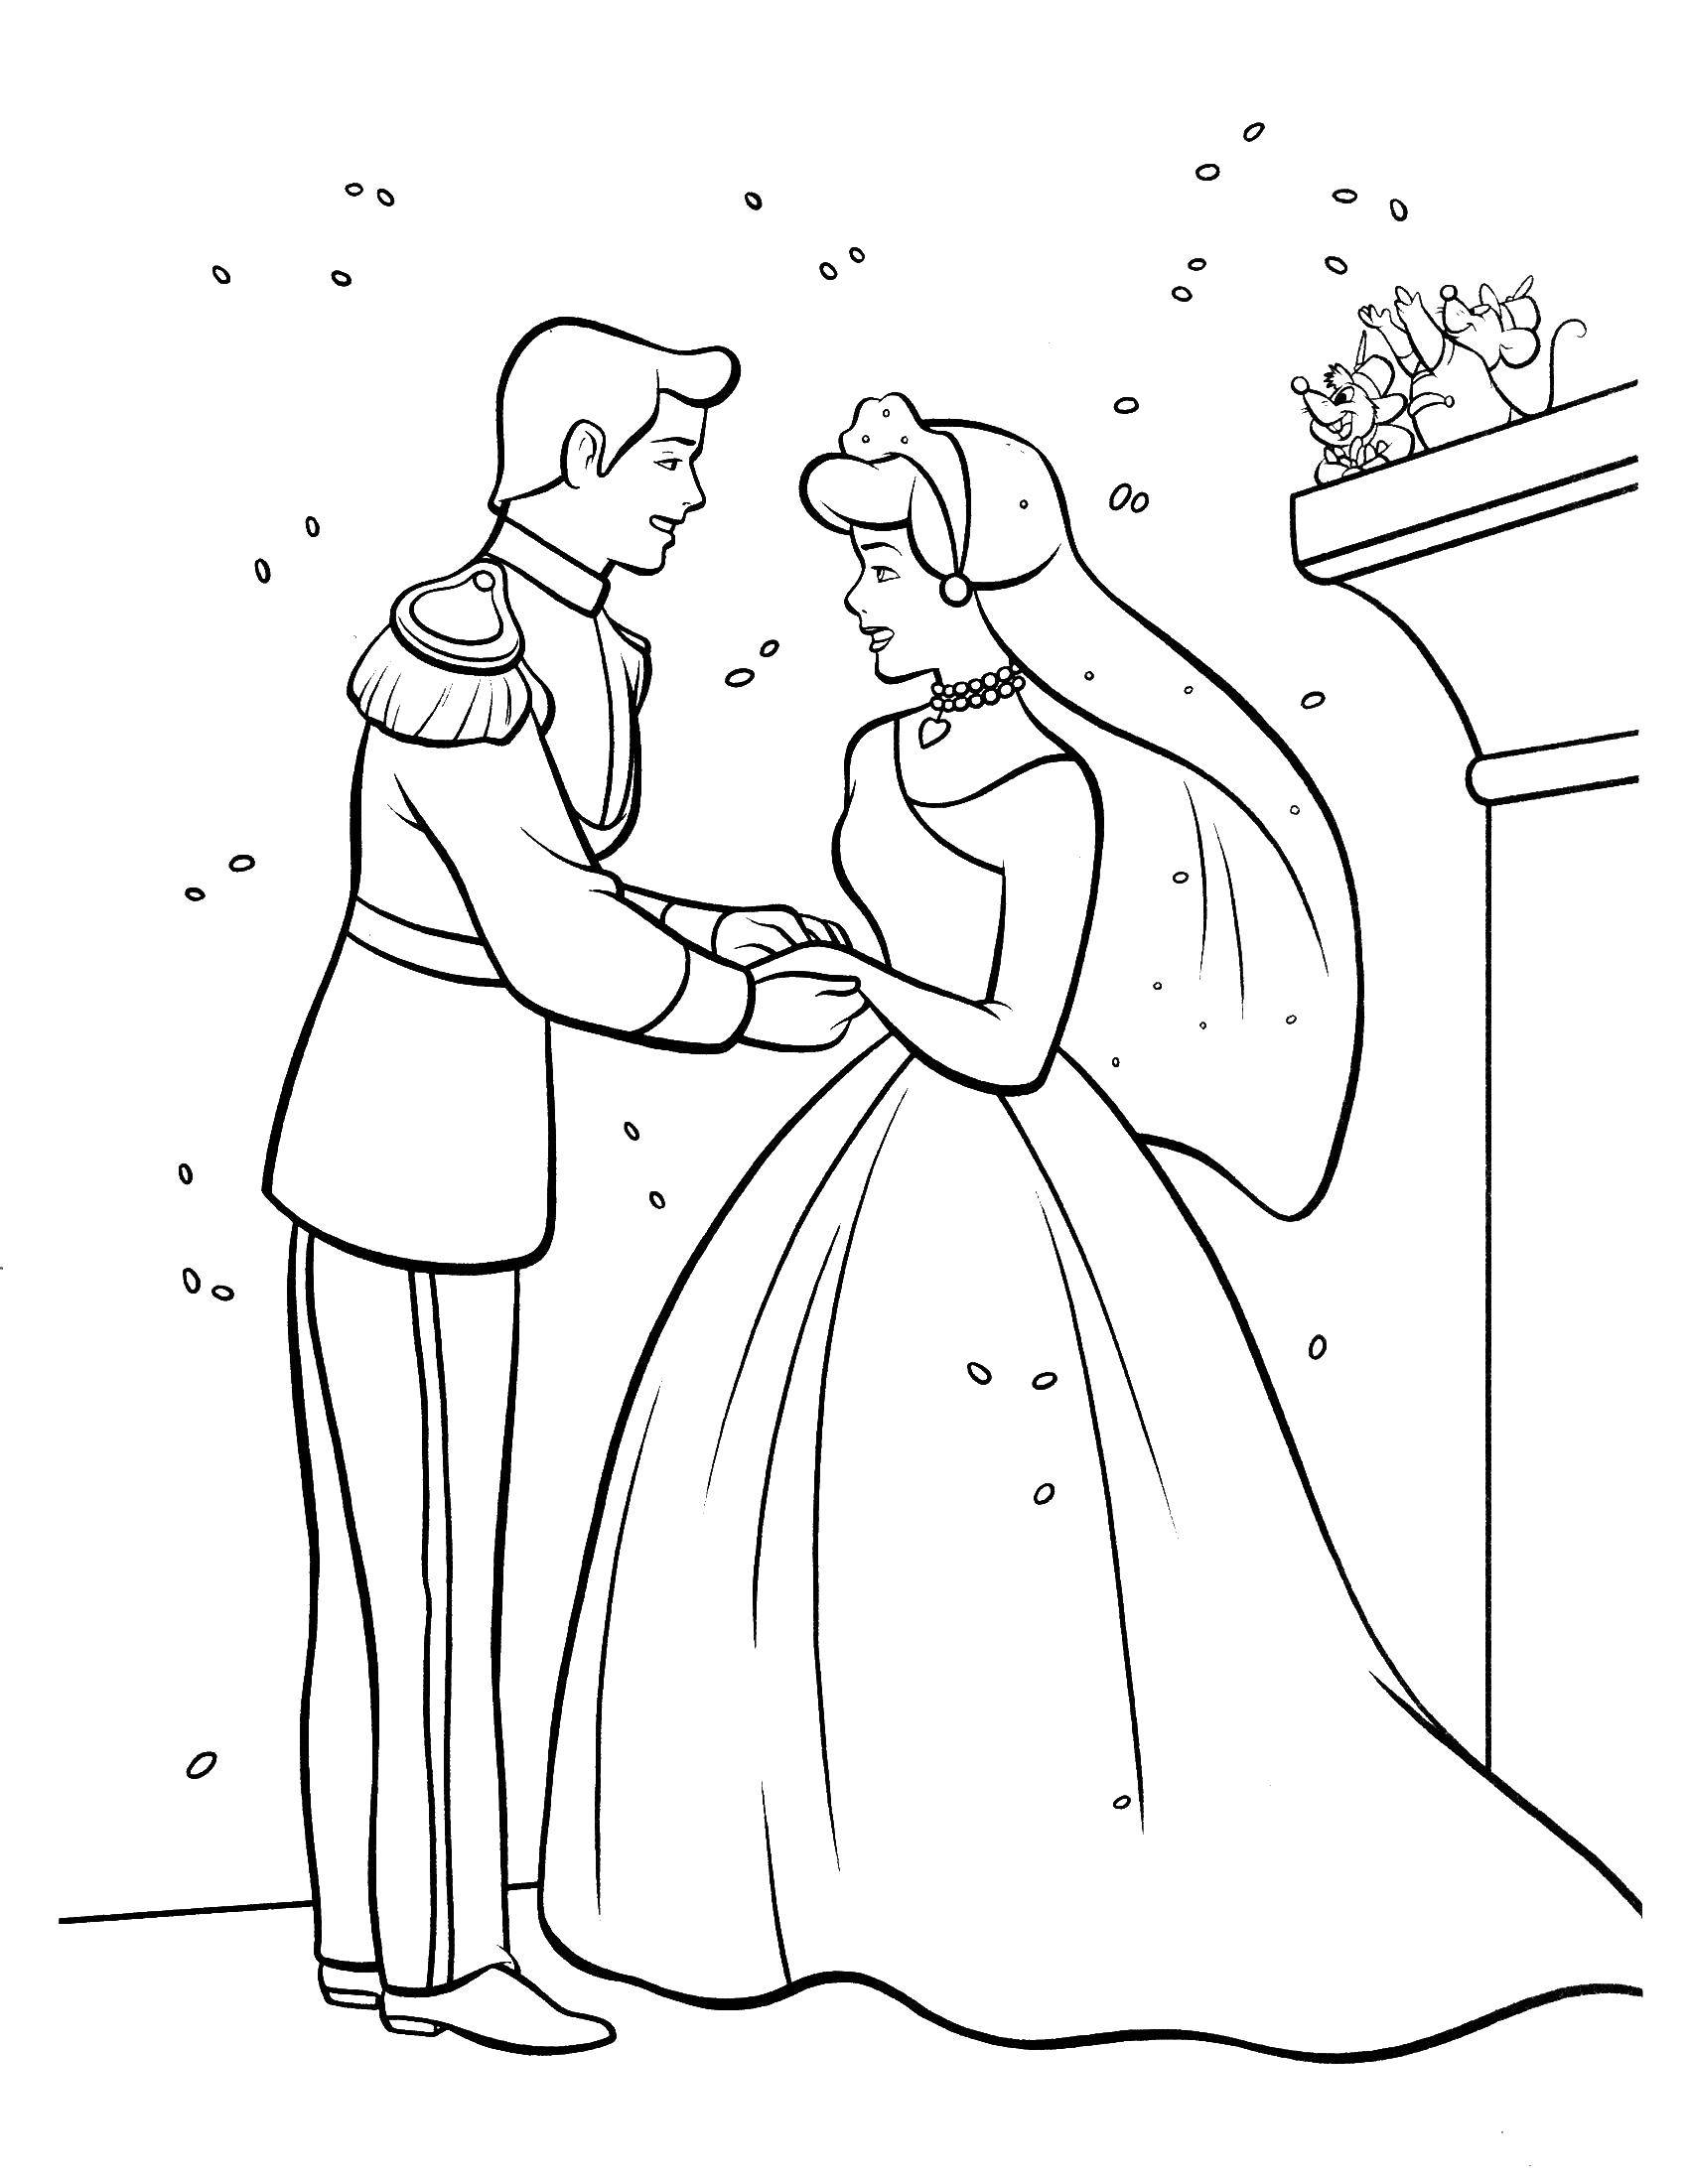 Название: Раскраска Принц и принцесса. Категория: Свадьба. Теги: свадьба, принц, принцесса.